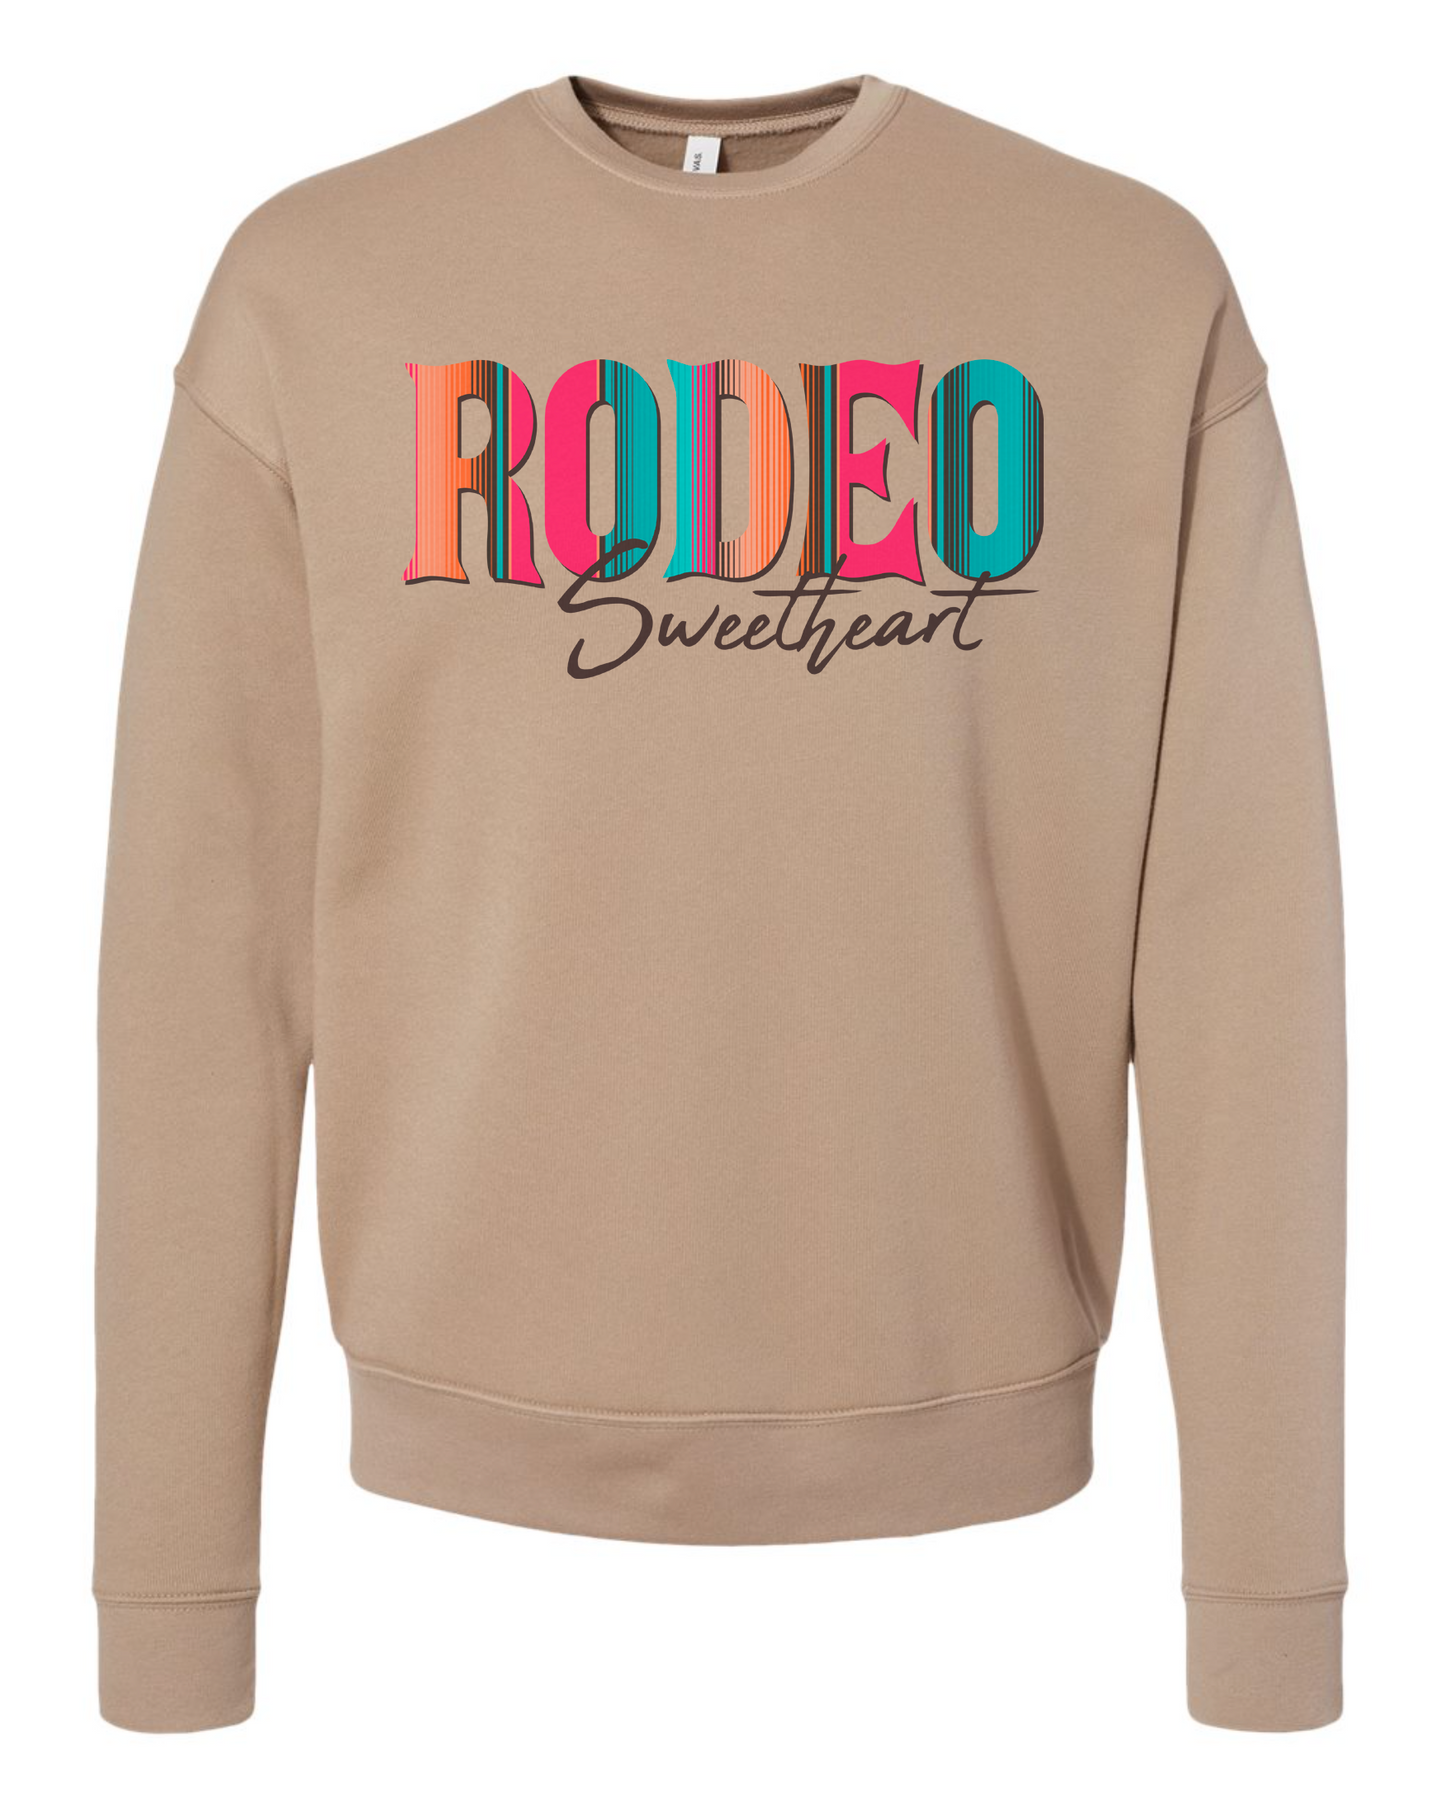 Rodeo Sweetheart T-Shirt